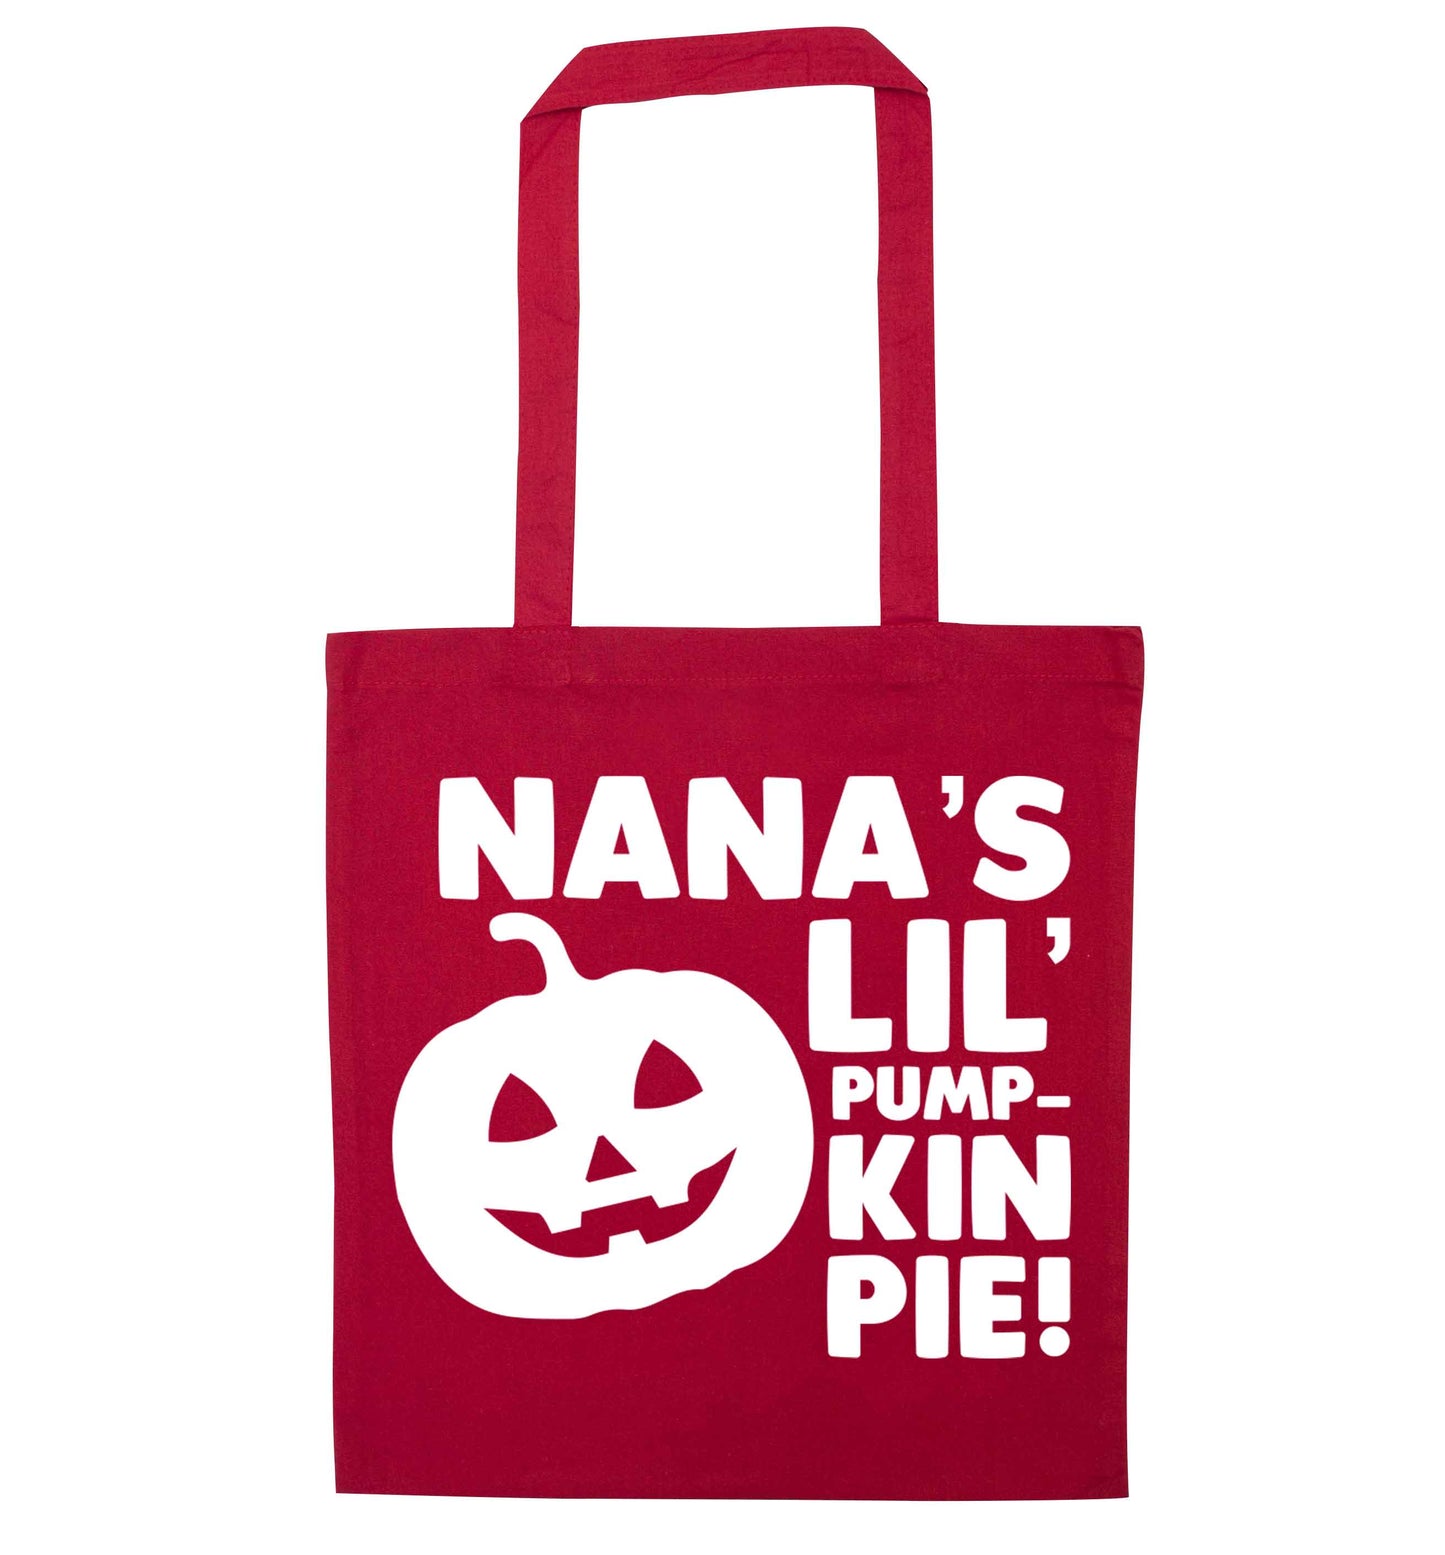 Nana's lil' pumpkin pie red tote bag